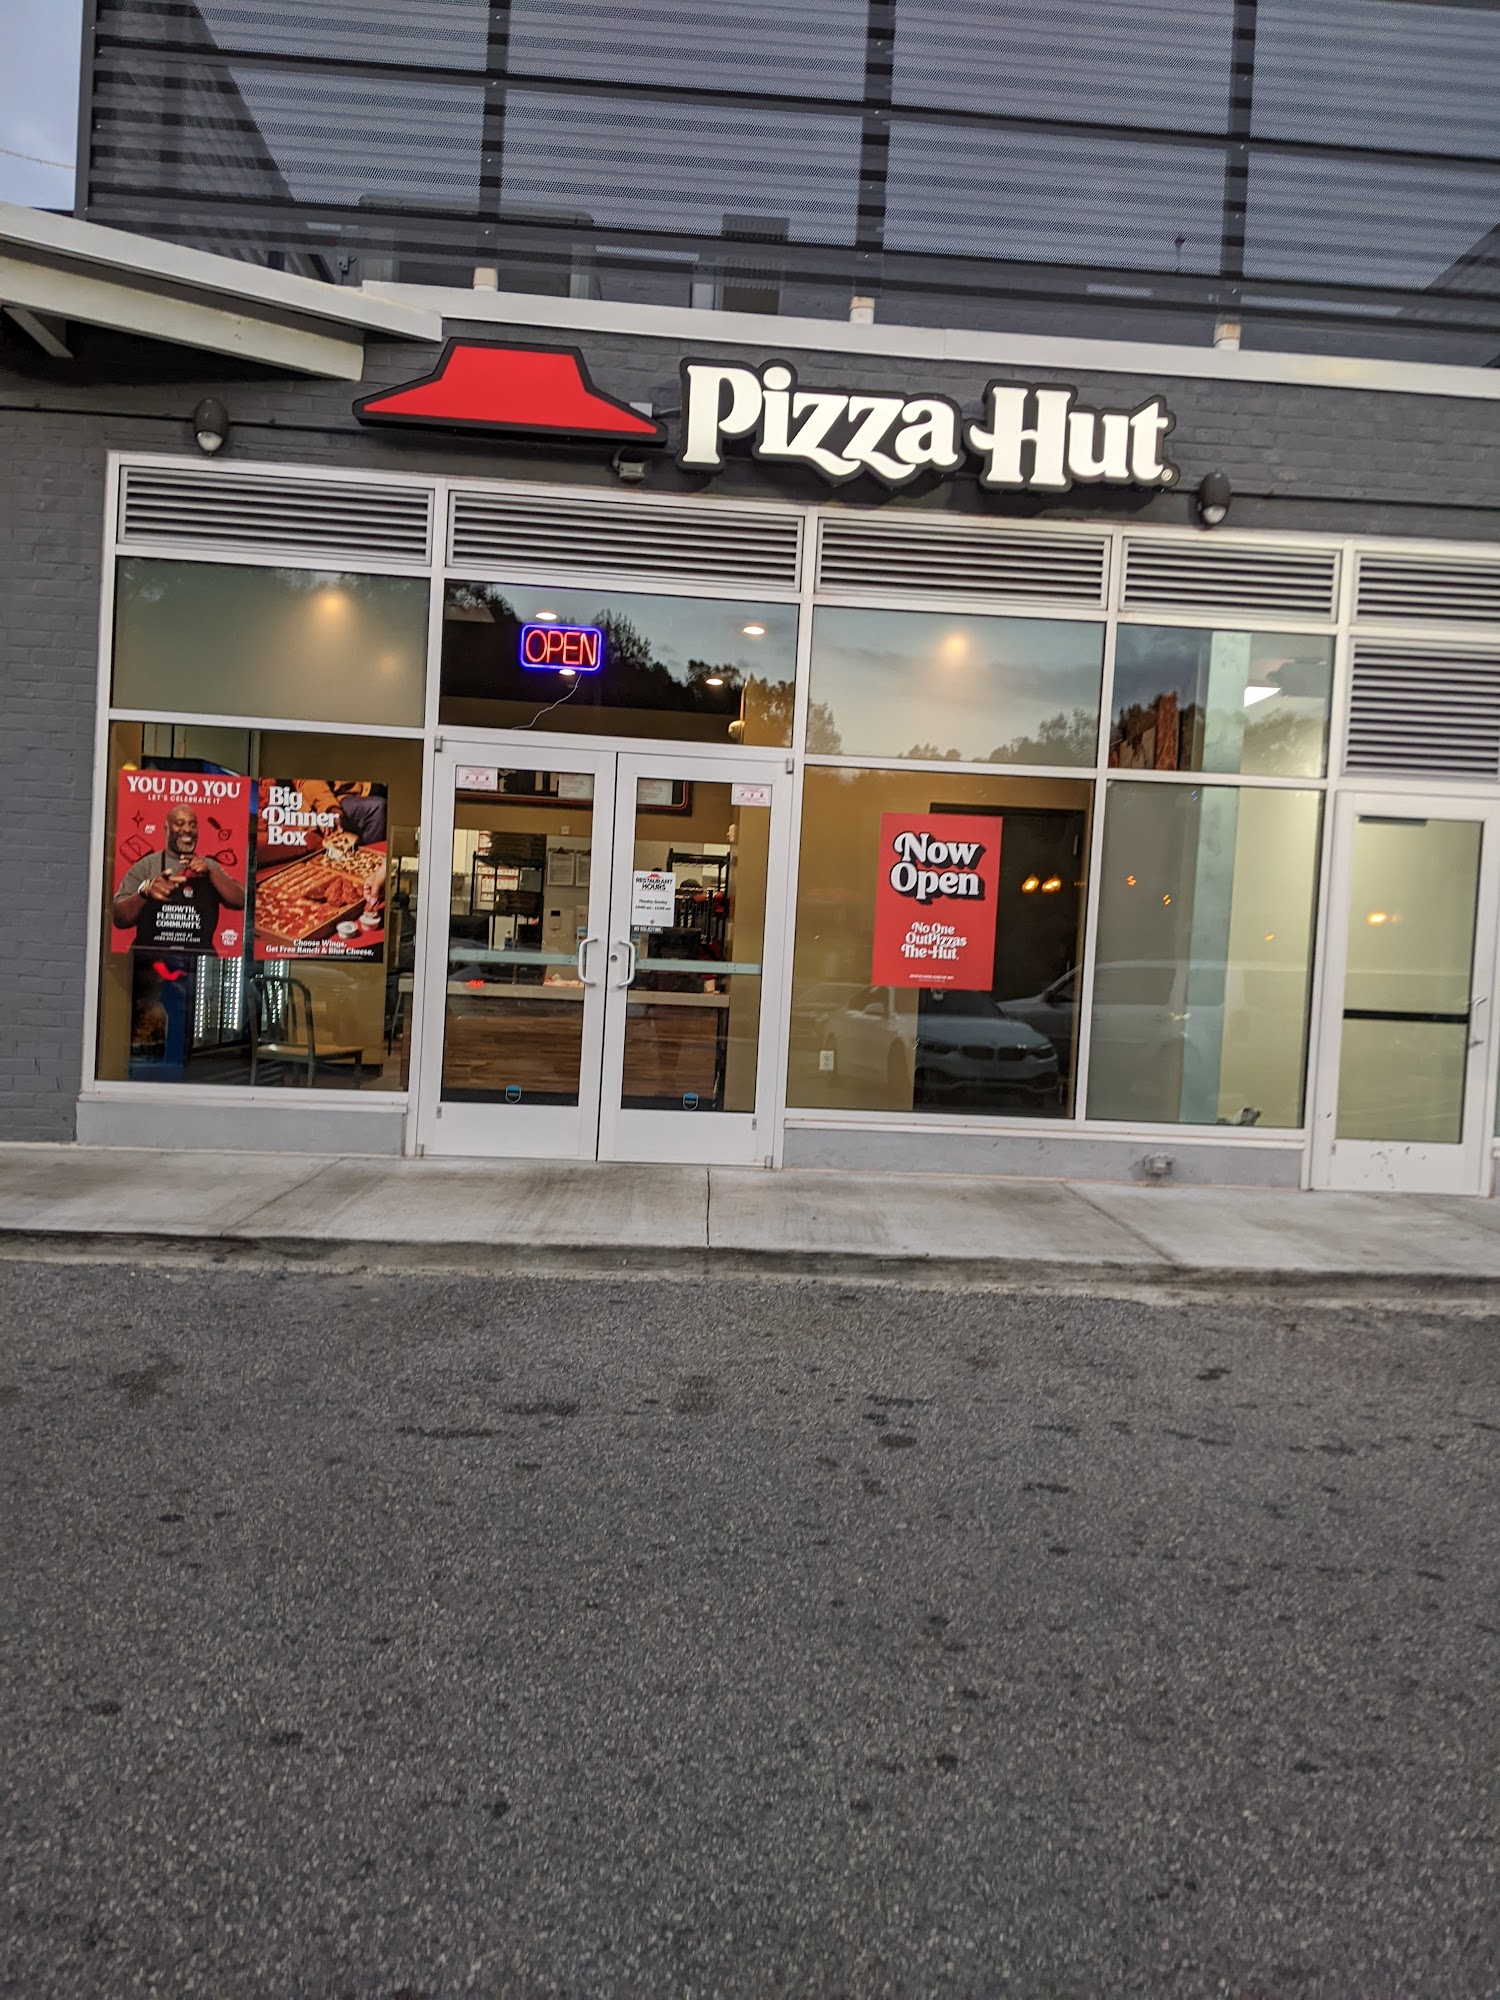 Pizza Hut 3232 Pennsylvania Ave. SE, Washington, DC 20020